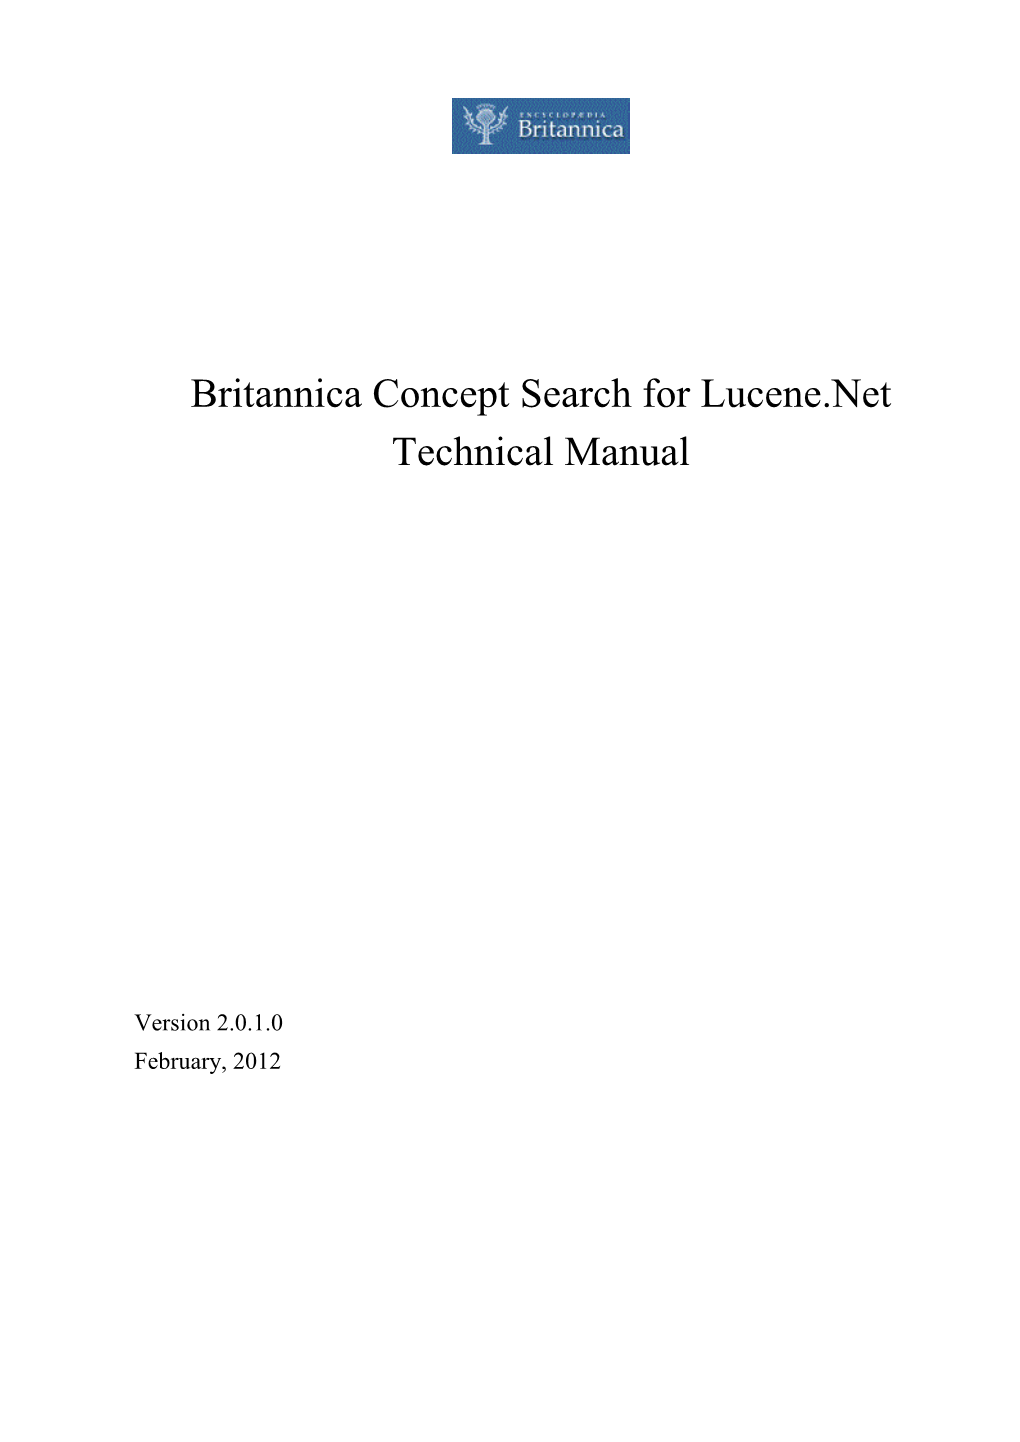 Britannica Concept Search for Lucene.Net Technical Manual